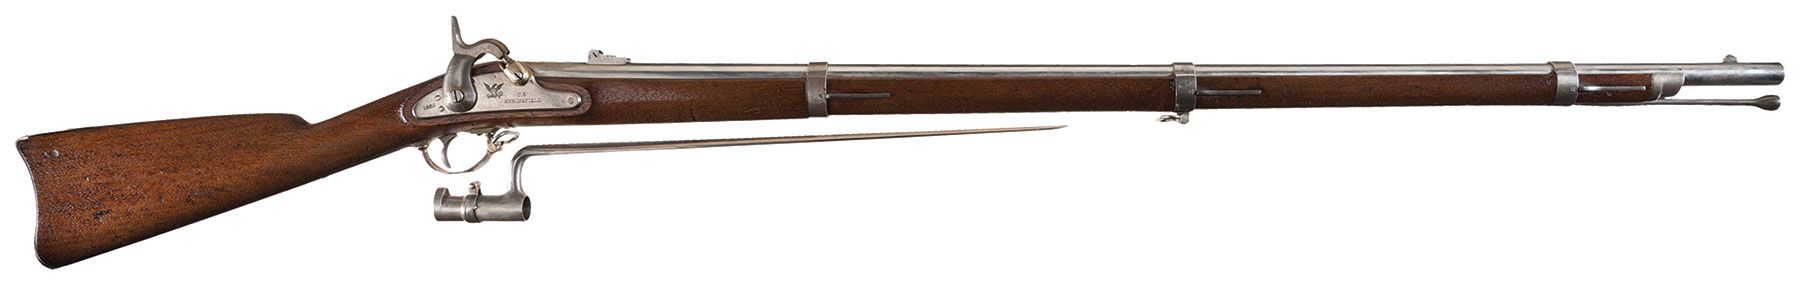 Civl War Springfield Model 1861 rifled musket